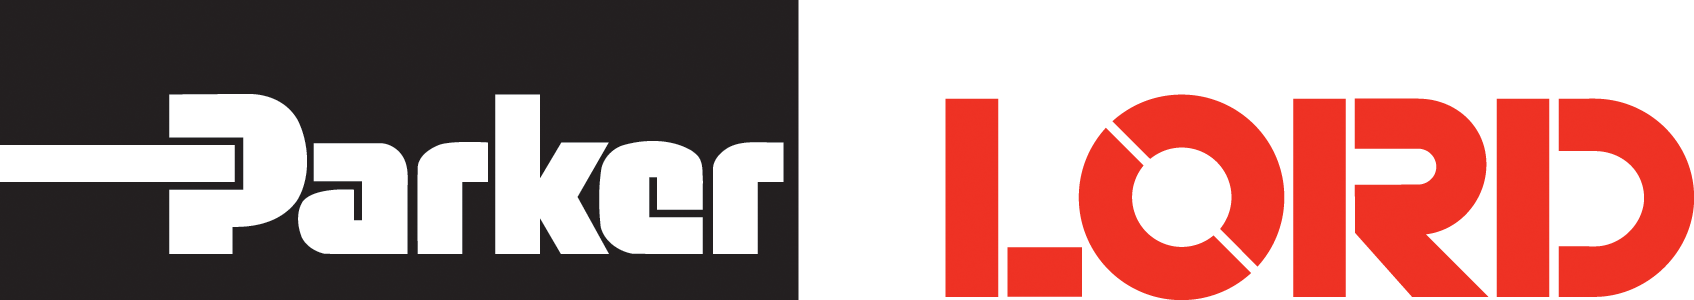 Parker-LORD-Logo-COLOR